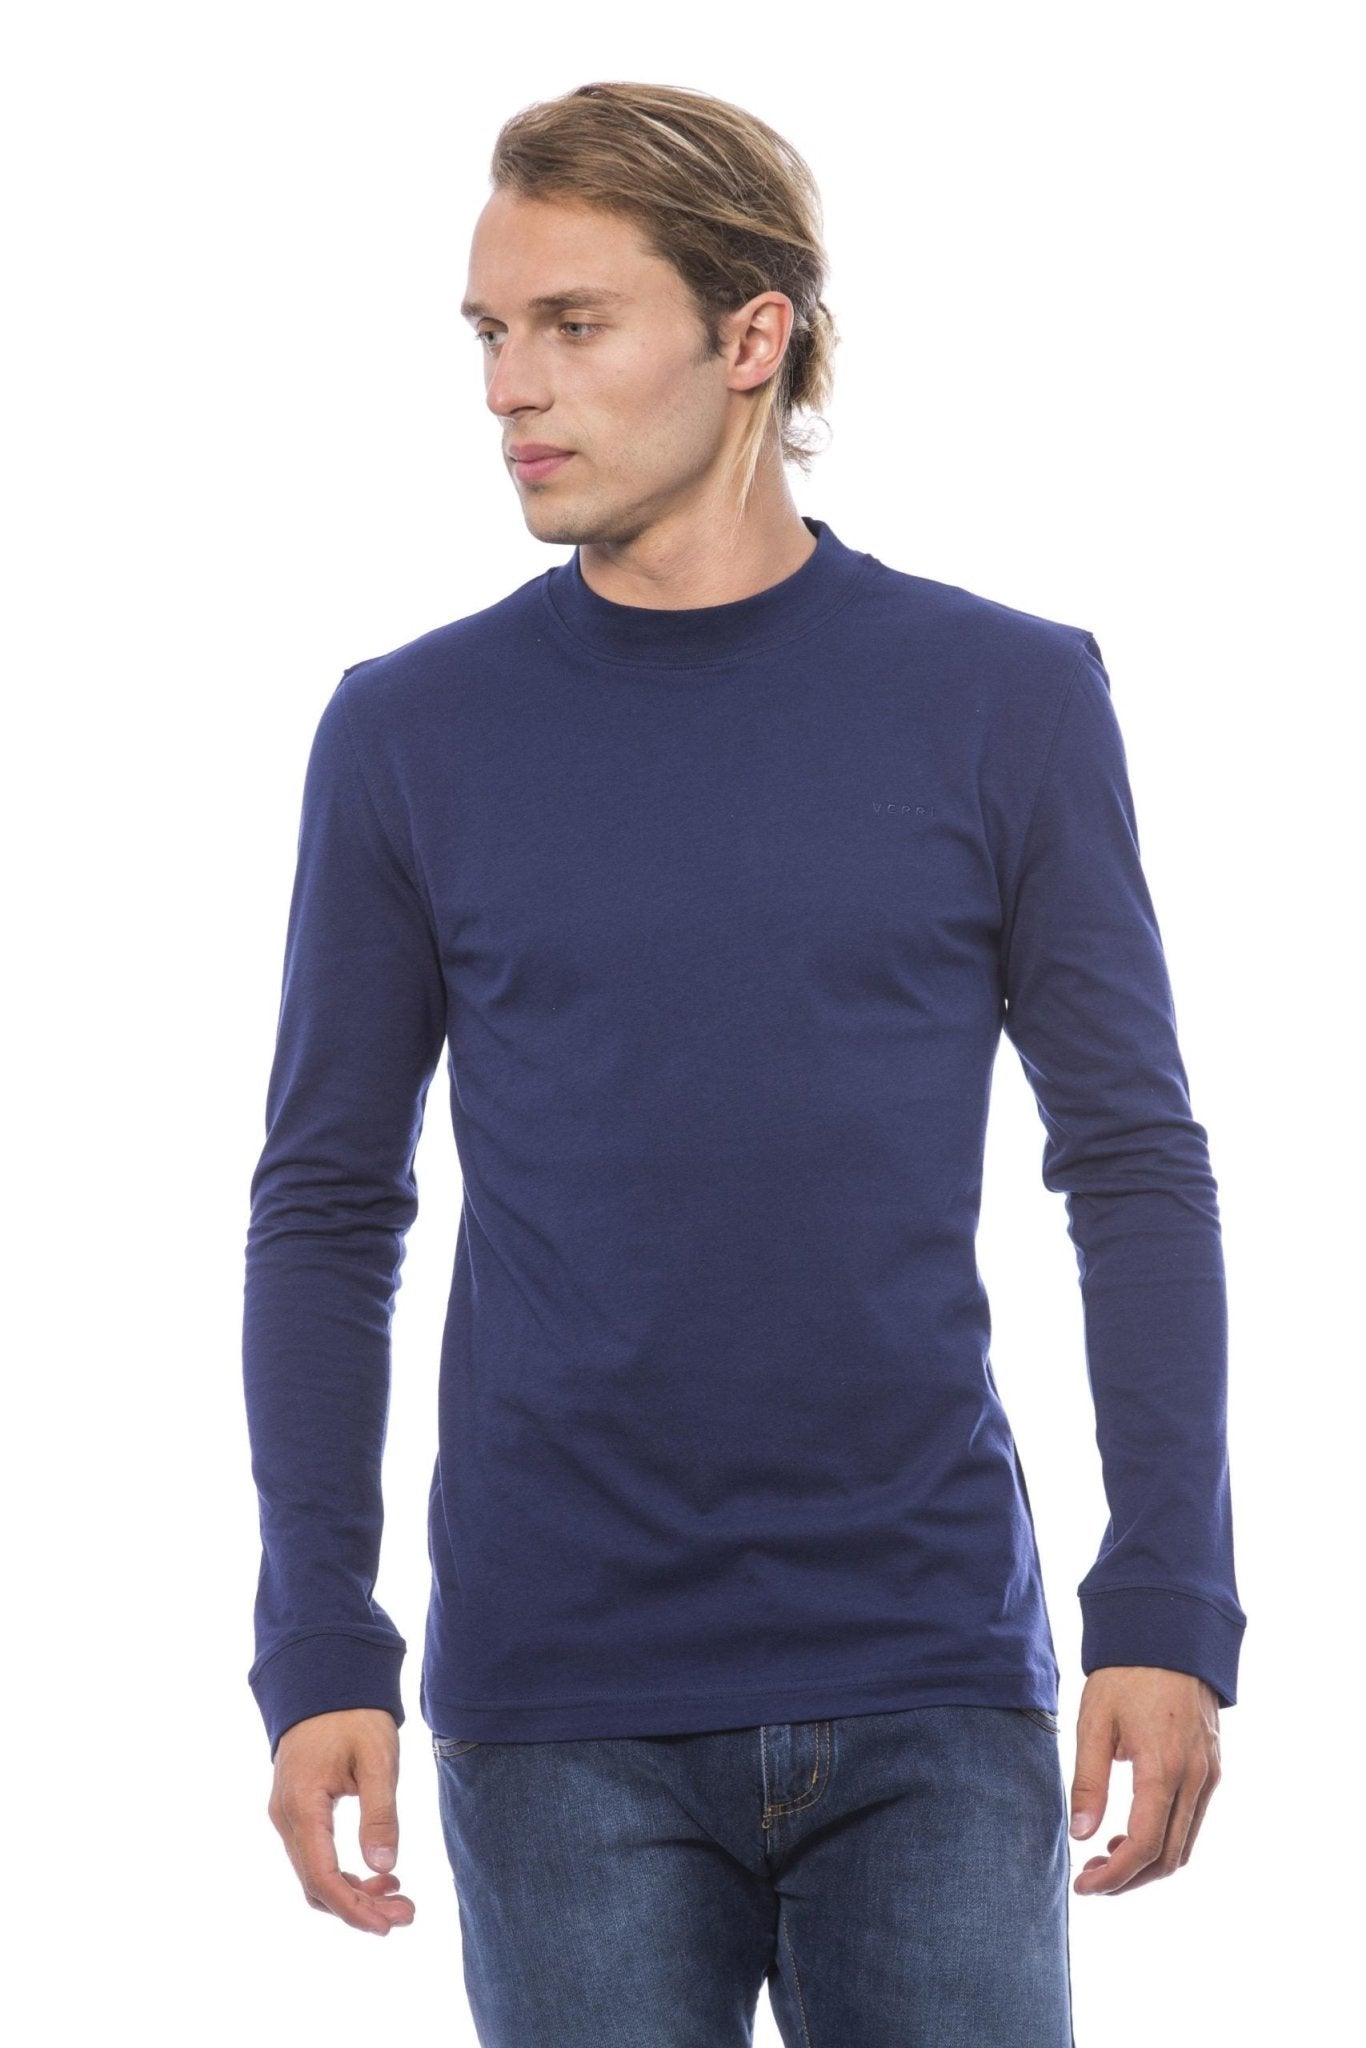 Verri Blue Cotton Sweater - Fizigo